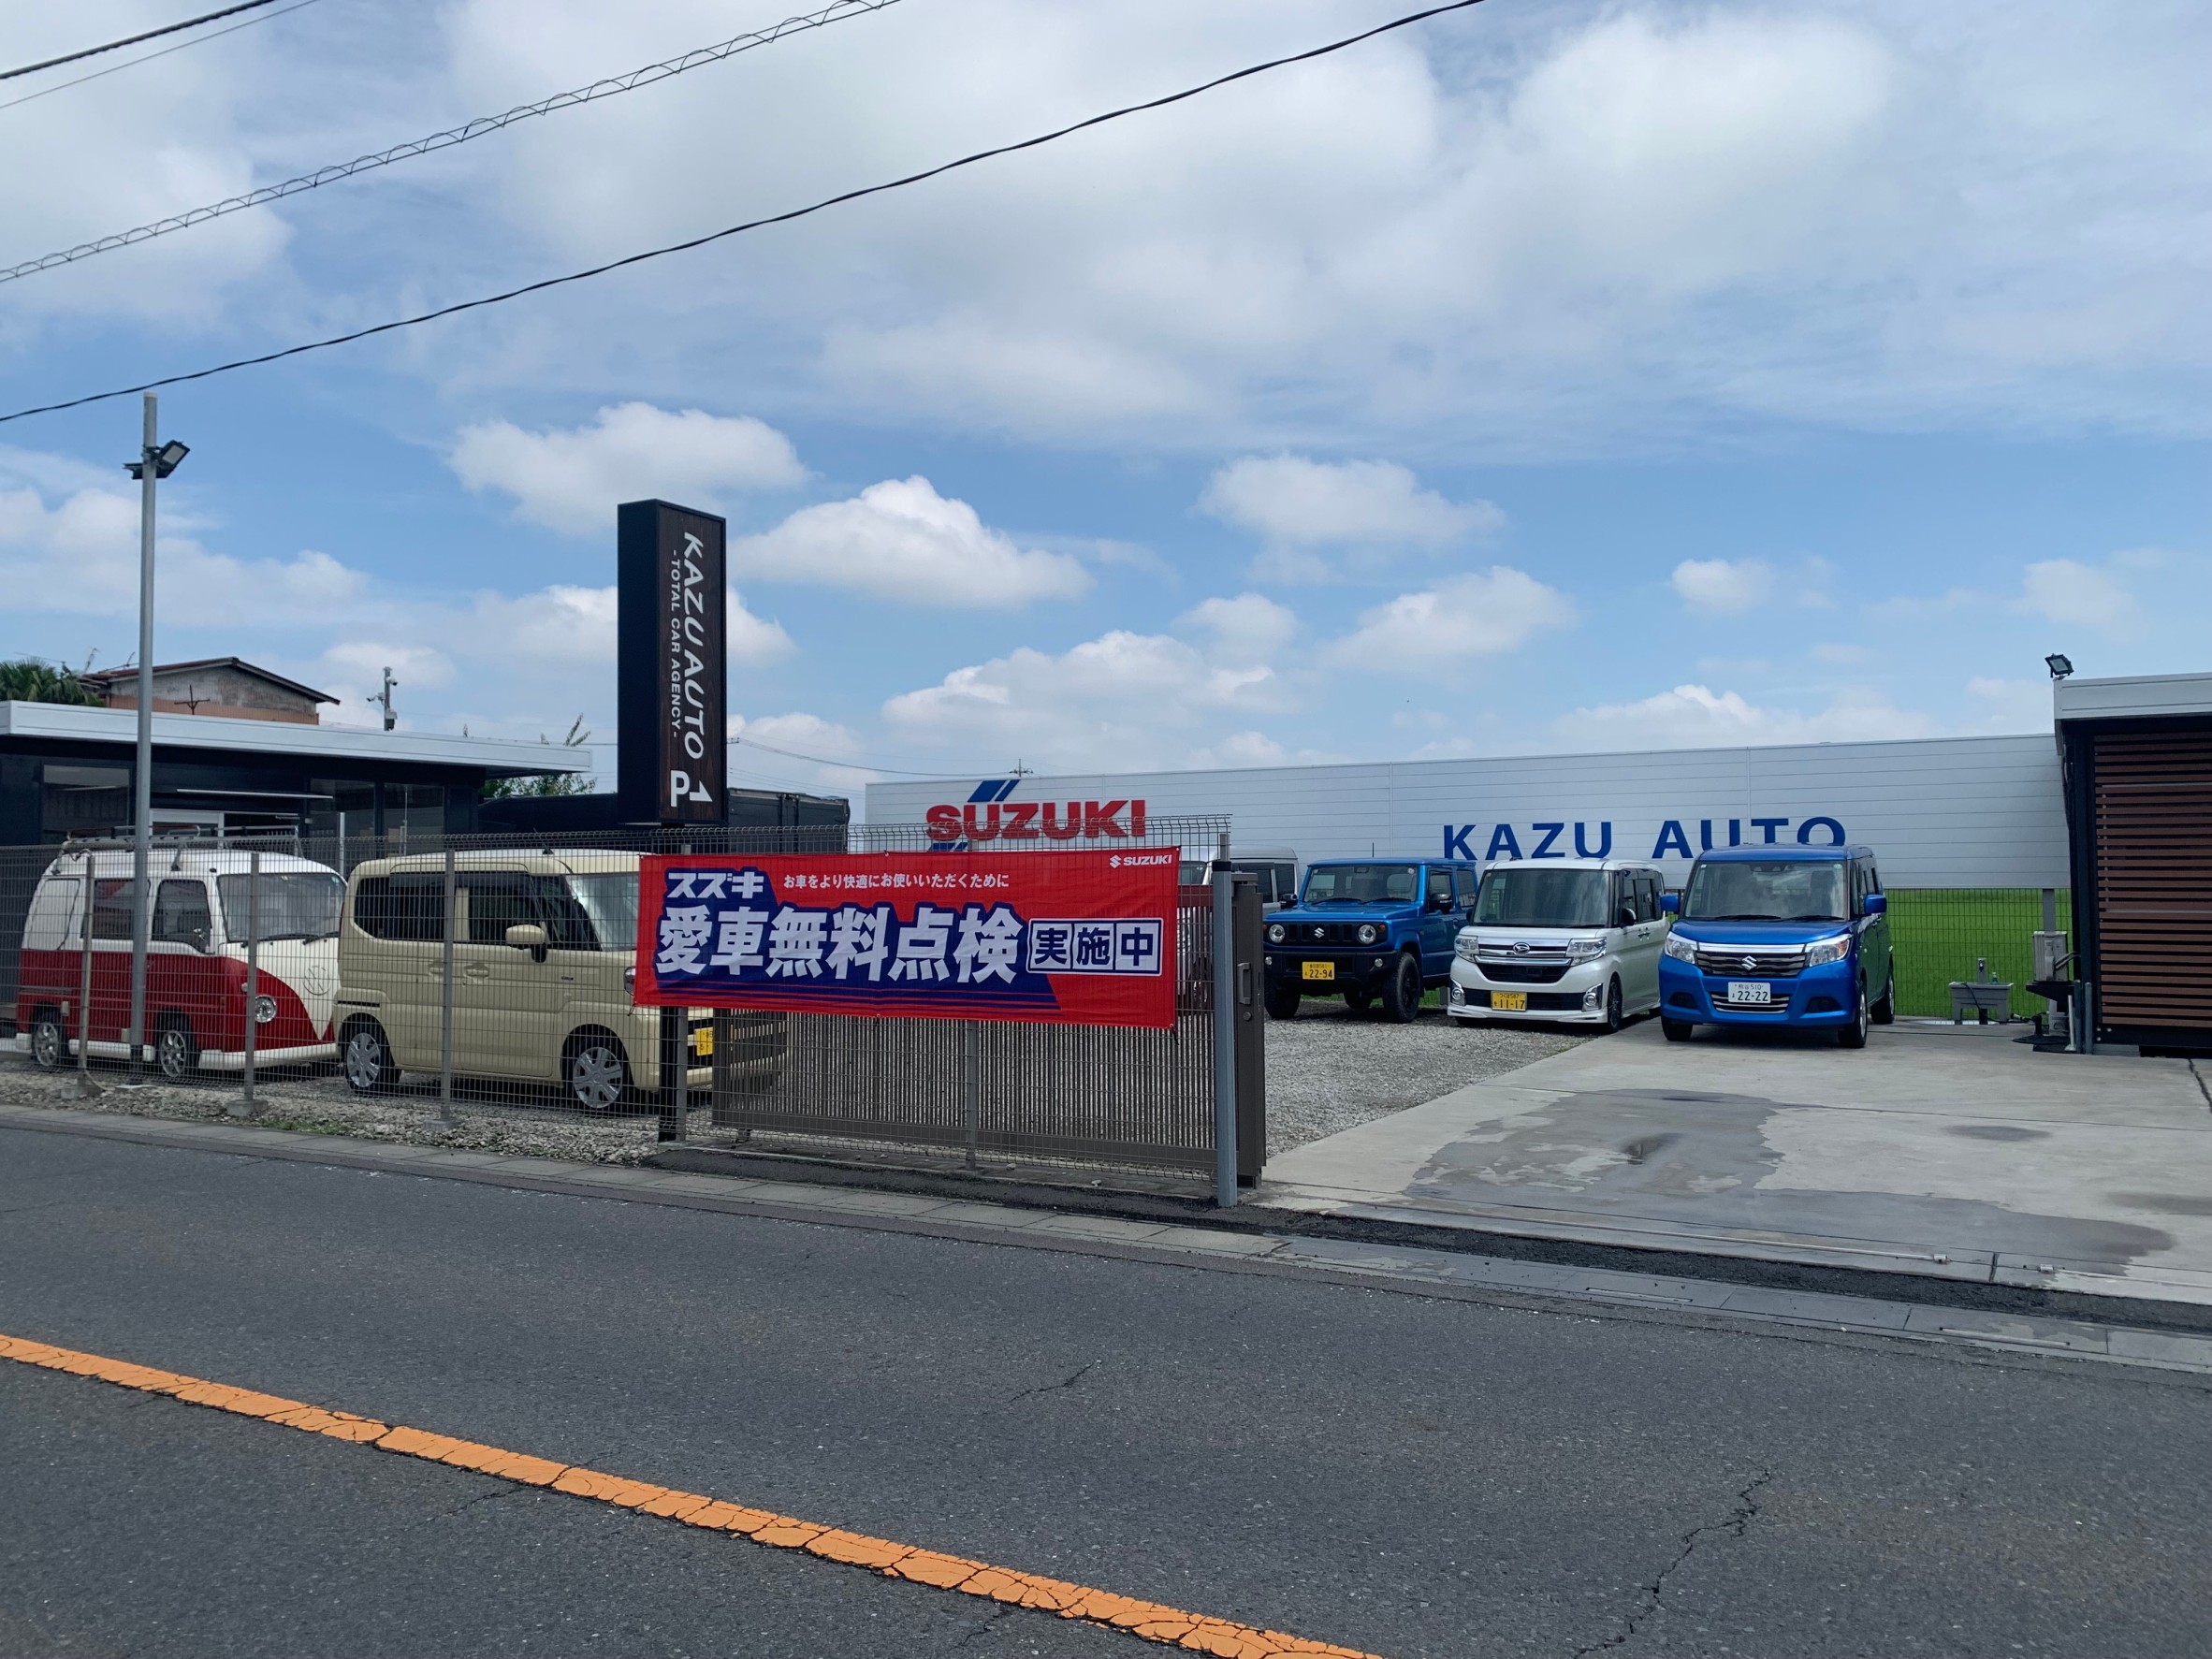 KAZUAUTO株式会社の店舗に愛車無料点検の横断幕を付けている画像